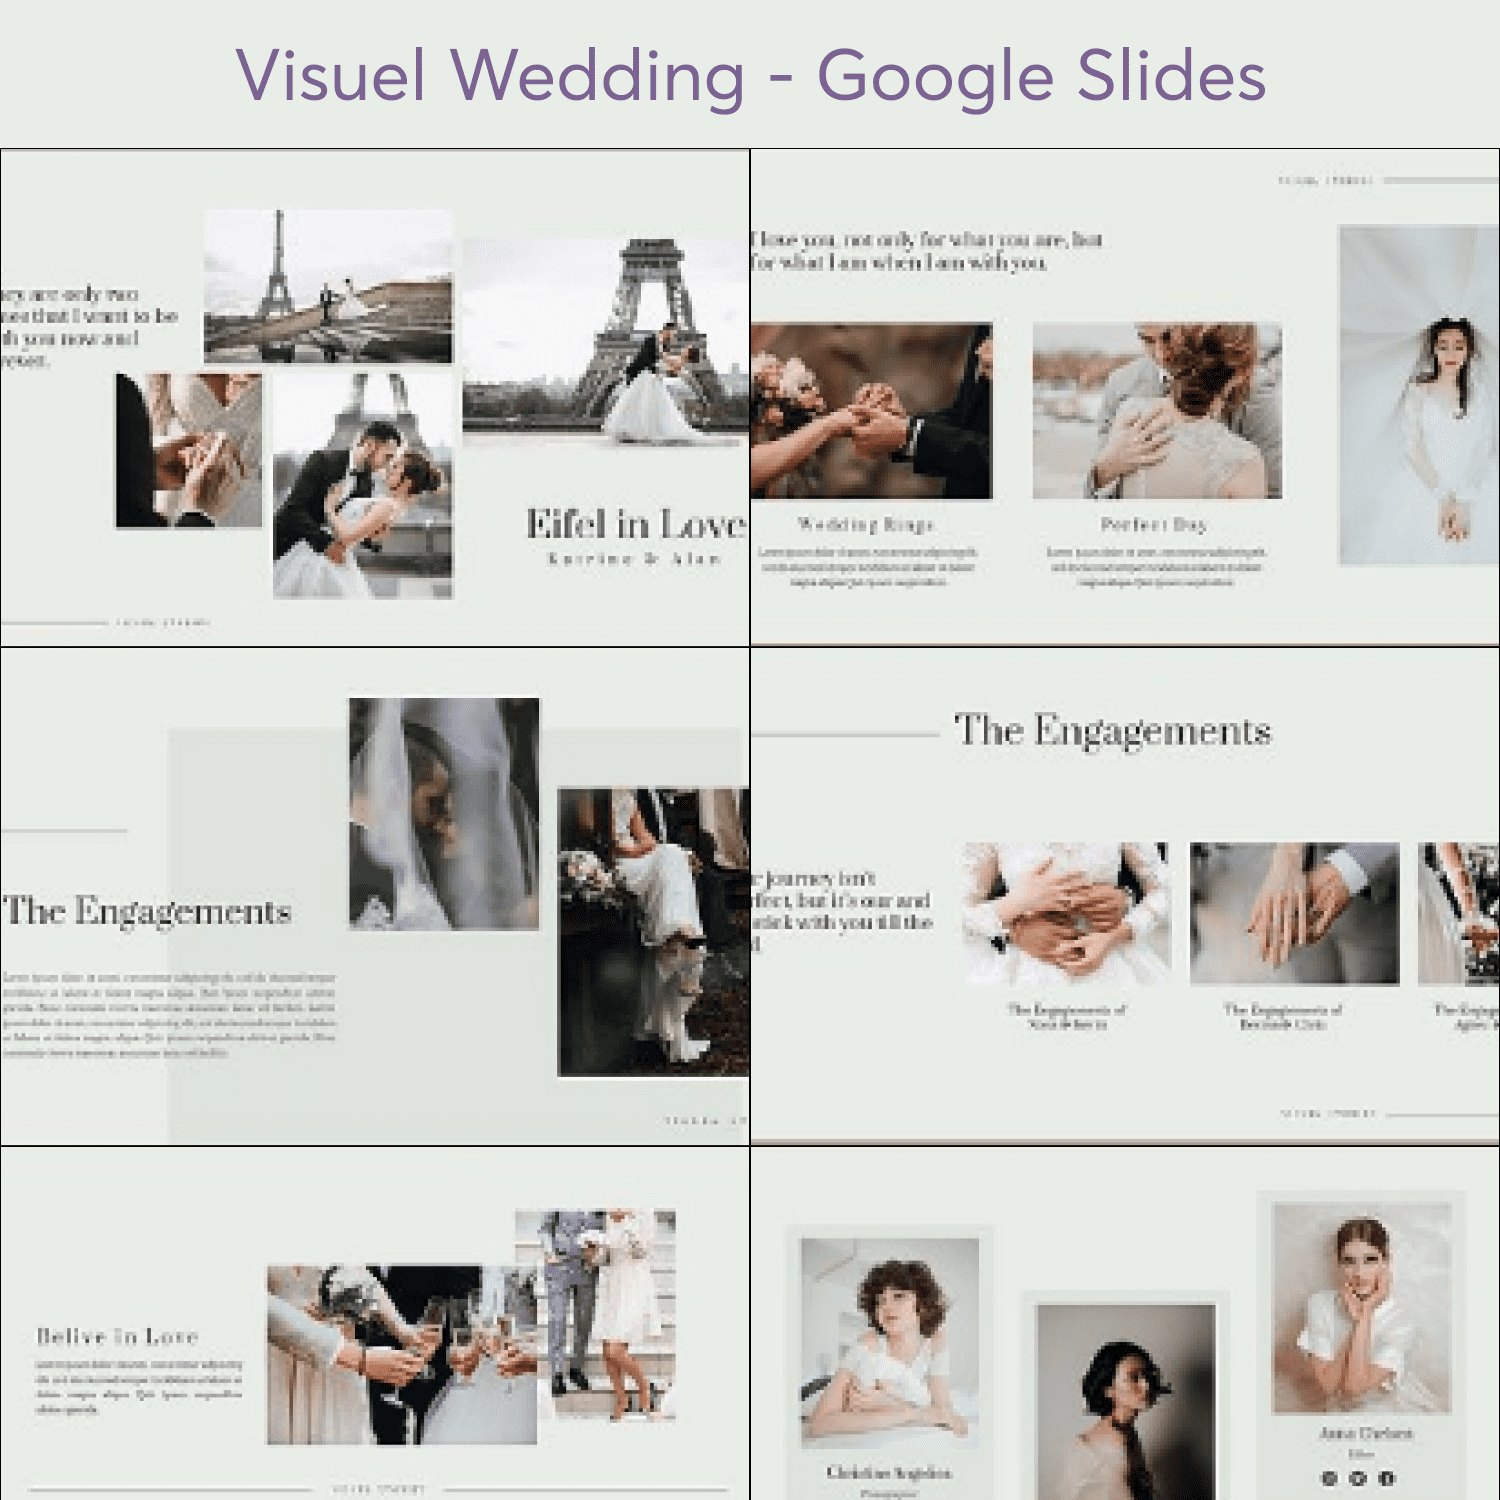 Visuel Wedding - Google Slides.